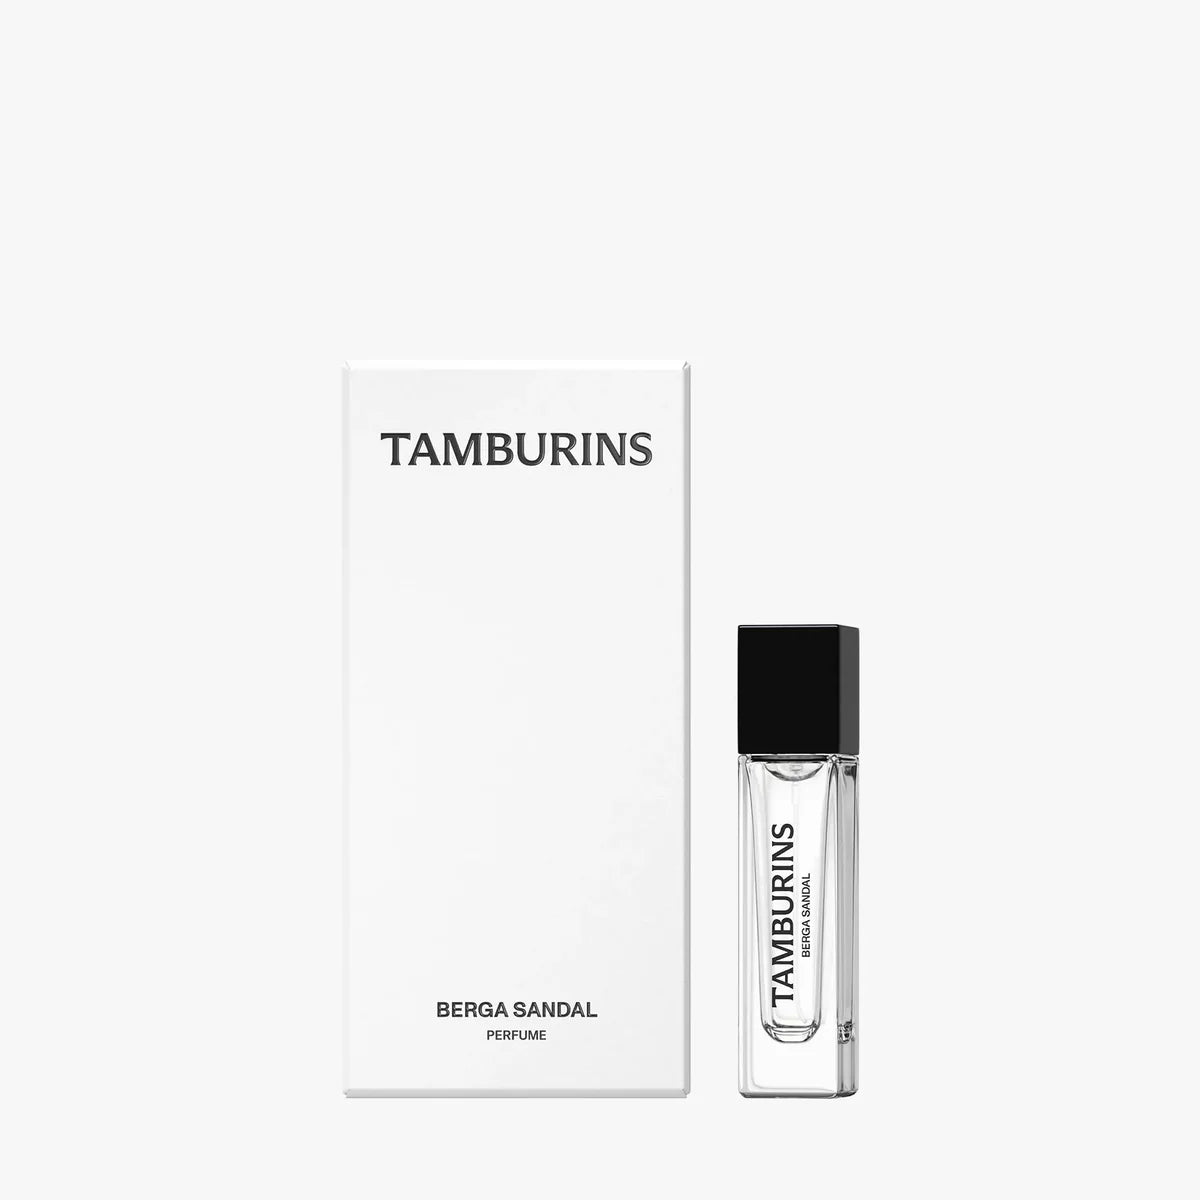 n elegant perfume bottle, labeled TAMBURINS Perfume #BERGA SANDAL 11ml, against a pure white backdrop.